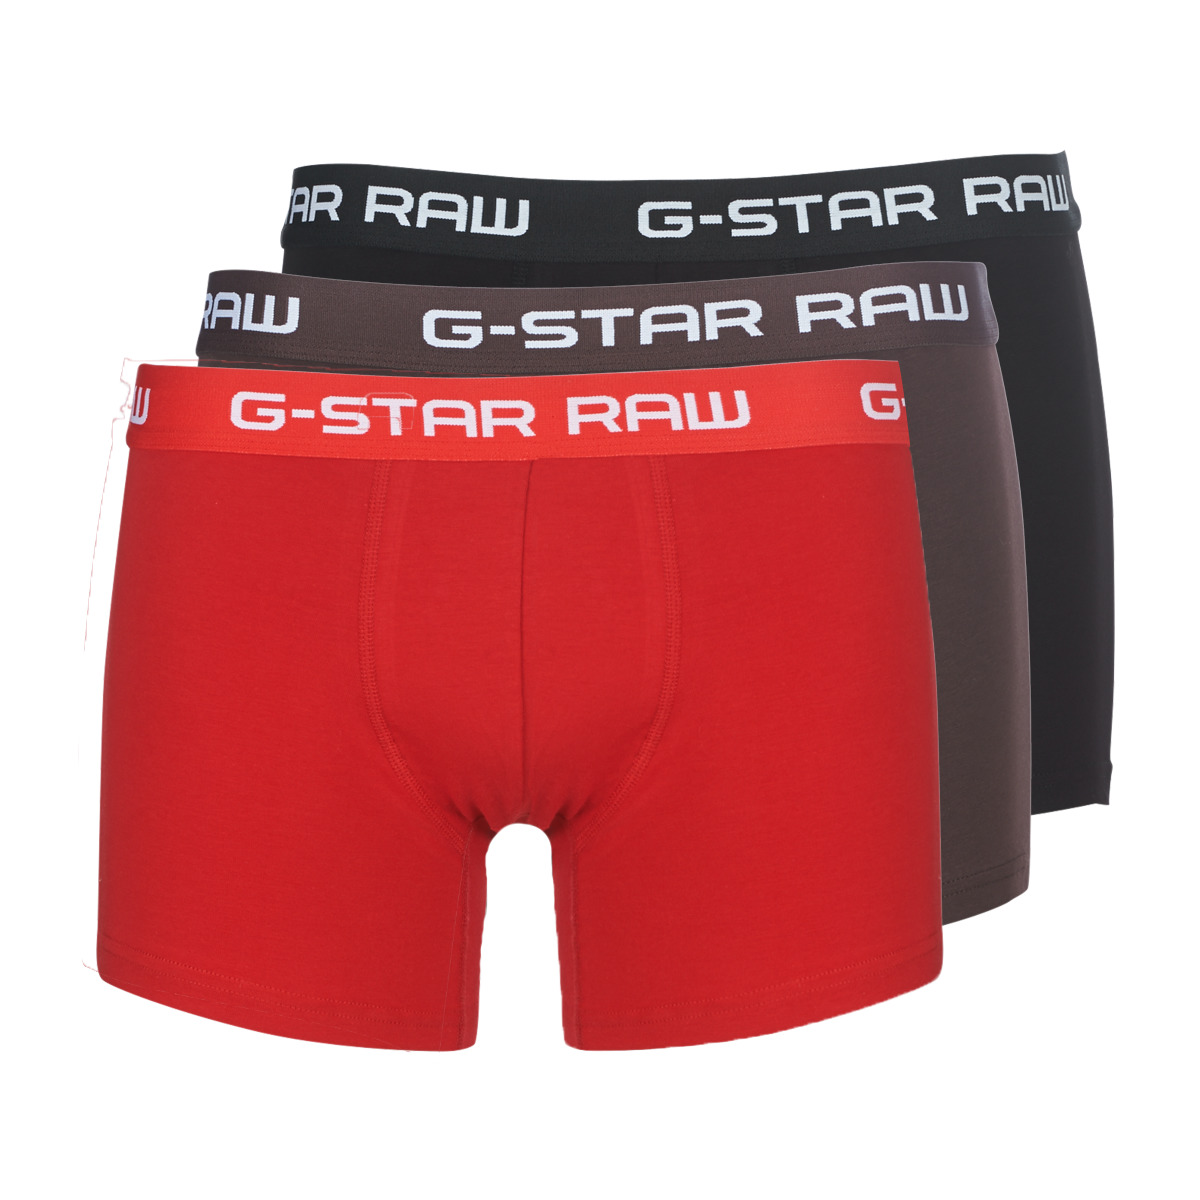 G-Star Raw Noir / Rouge / Marron CLASSIC TRUNK CLR 3 PACK TLcsCp5p